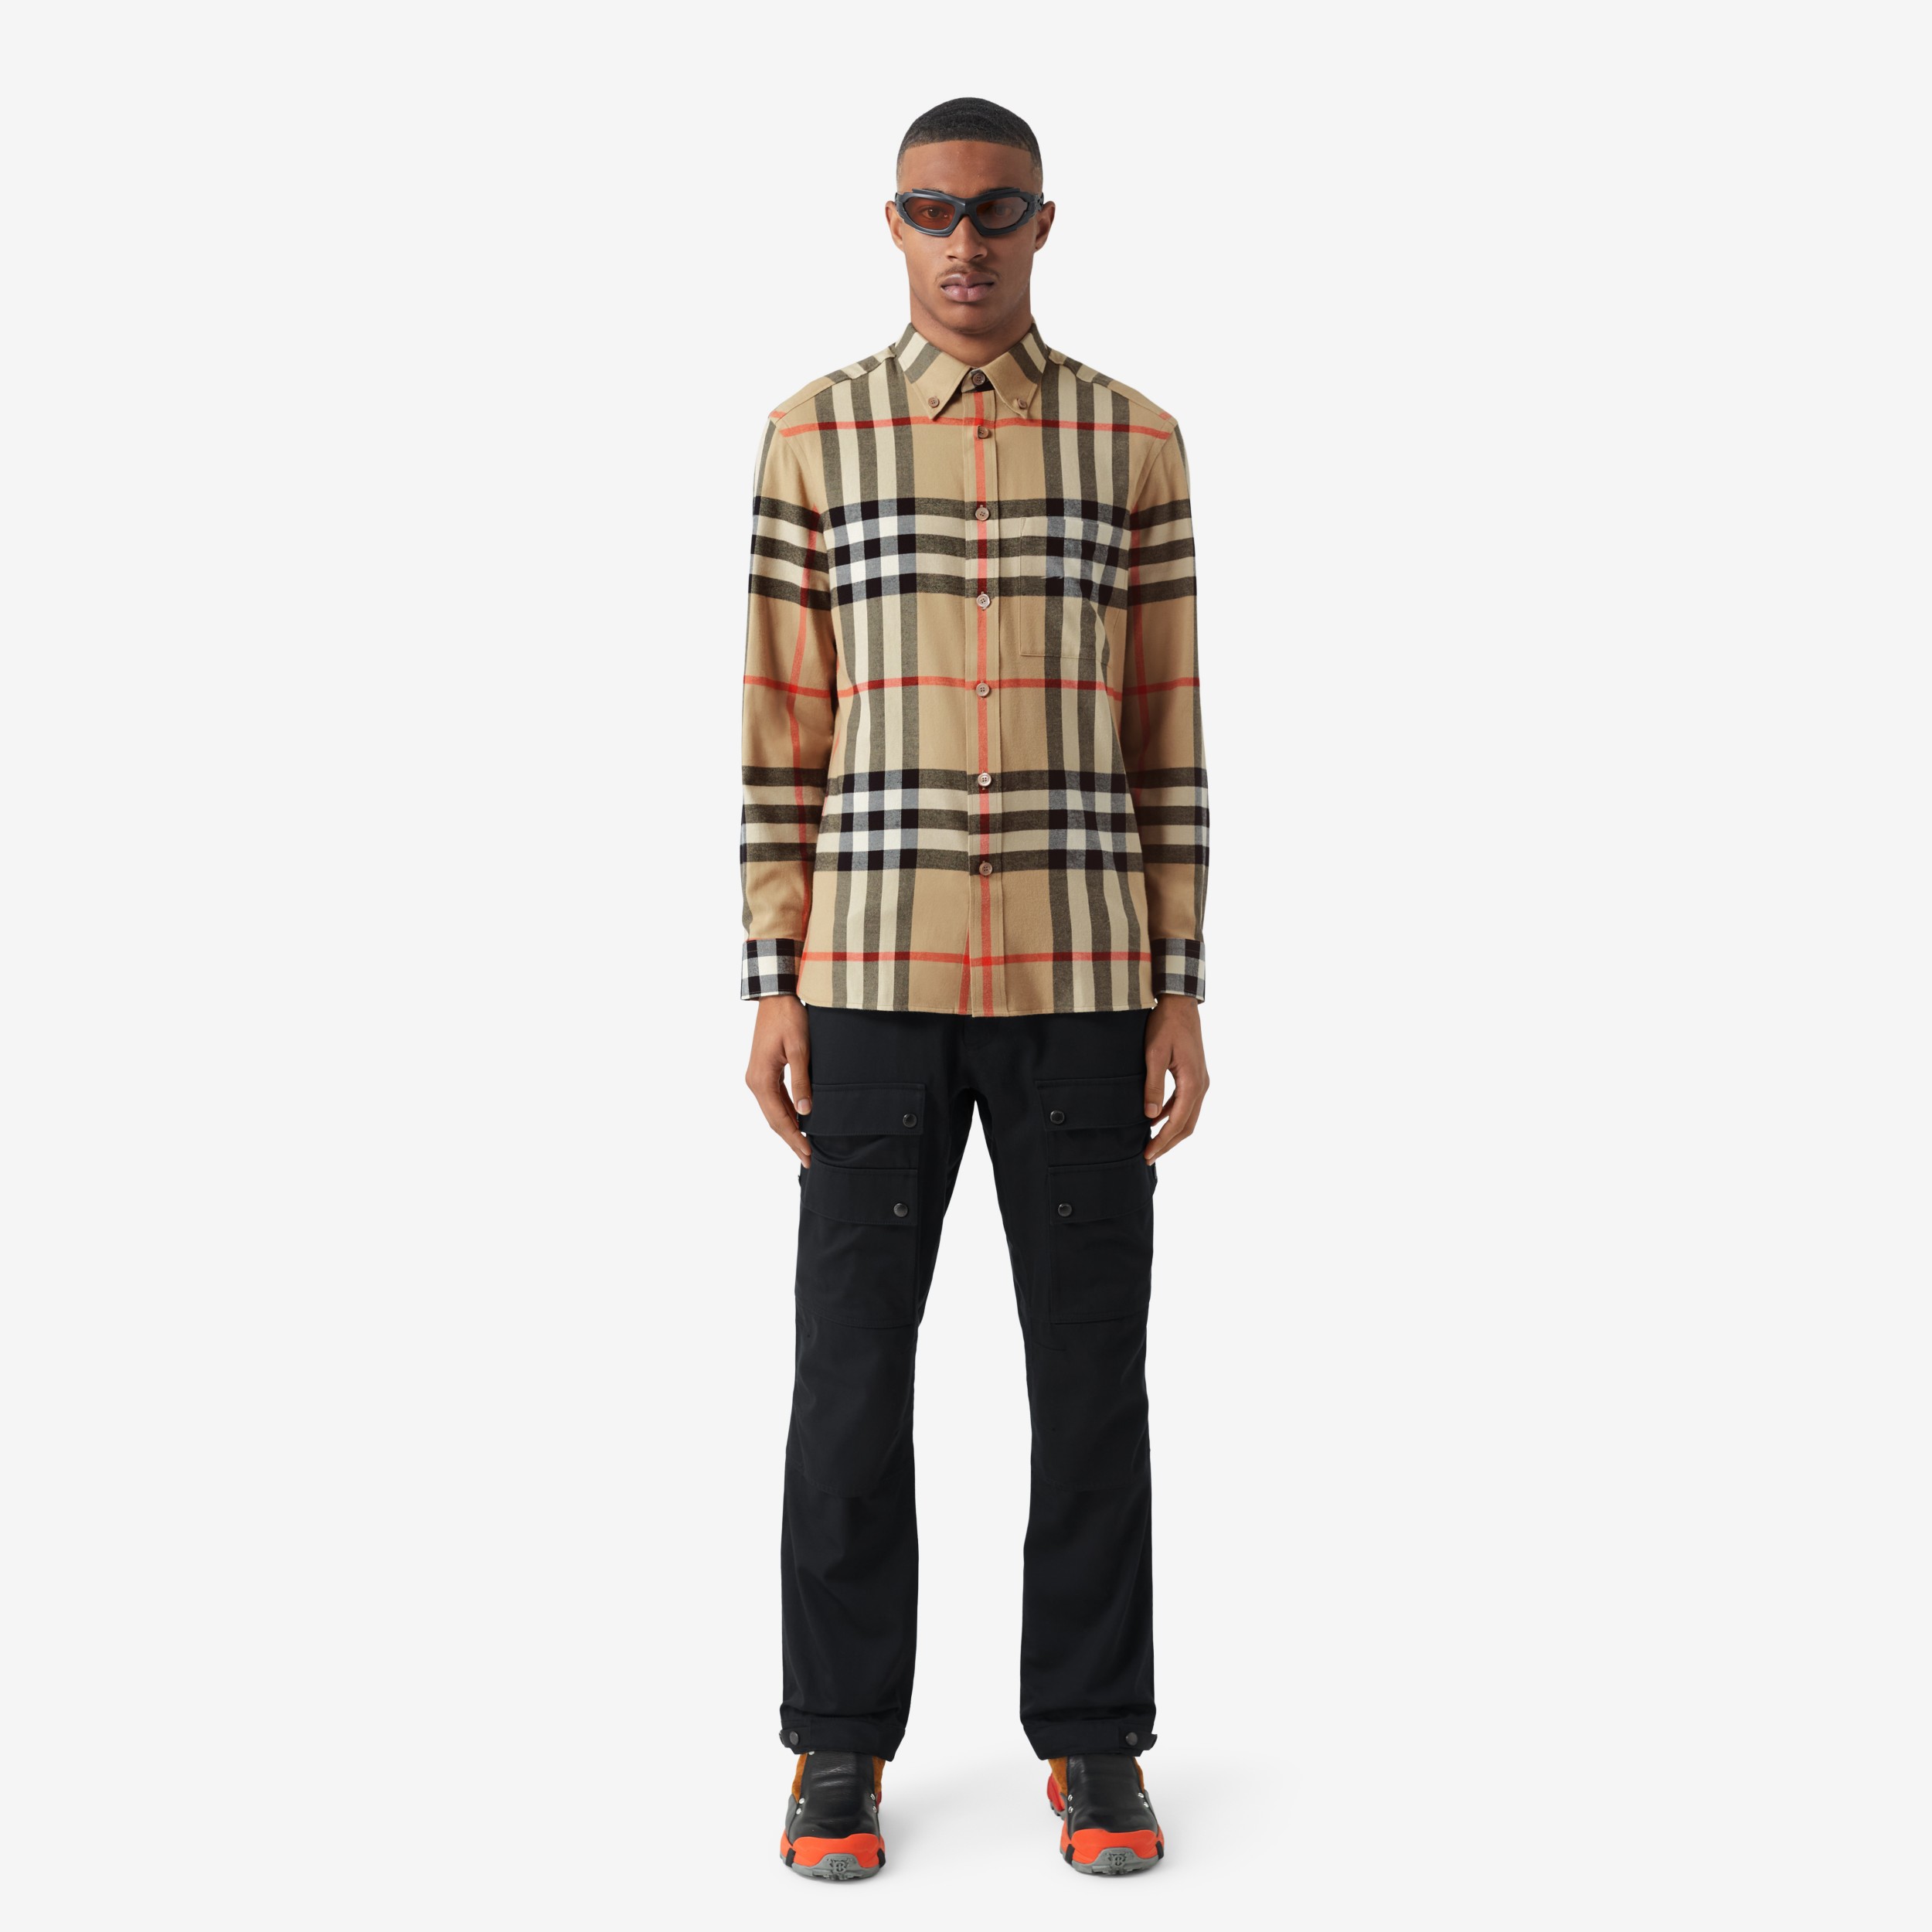 Actualizar 41+ imagen burberry flannels - Abzlocal.mx